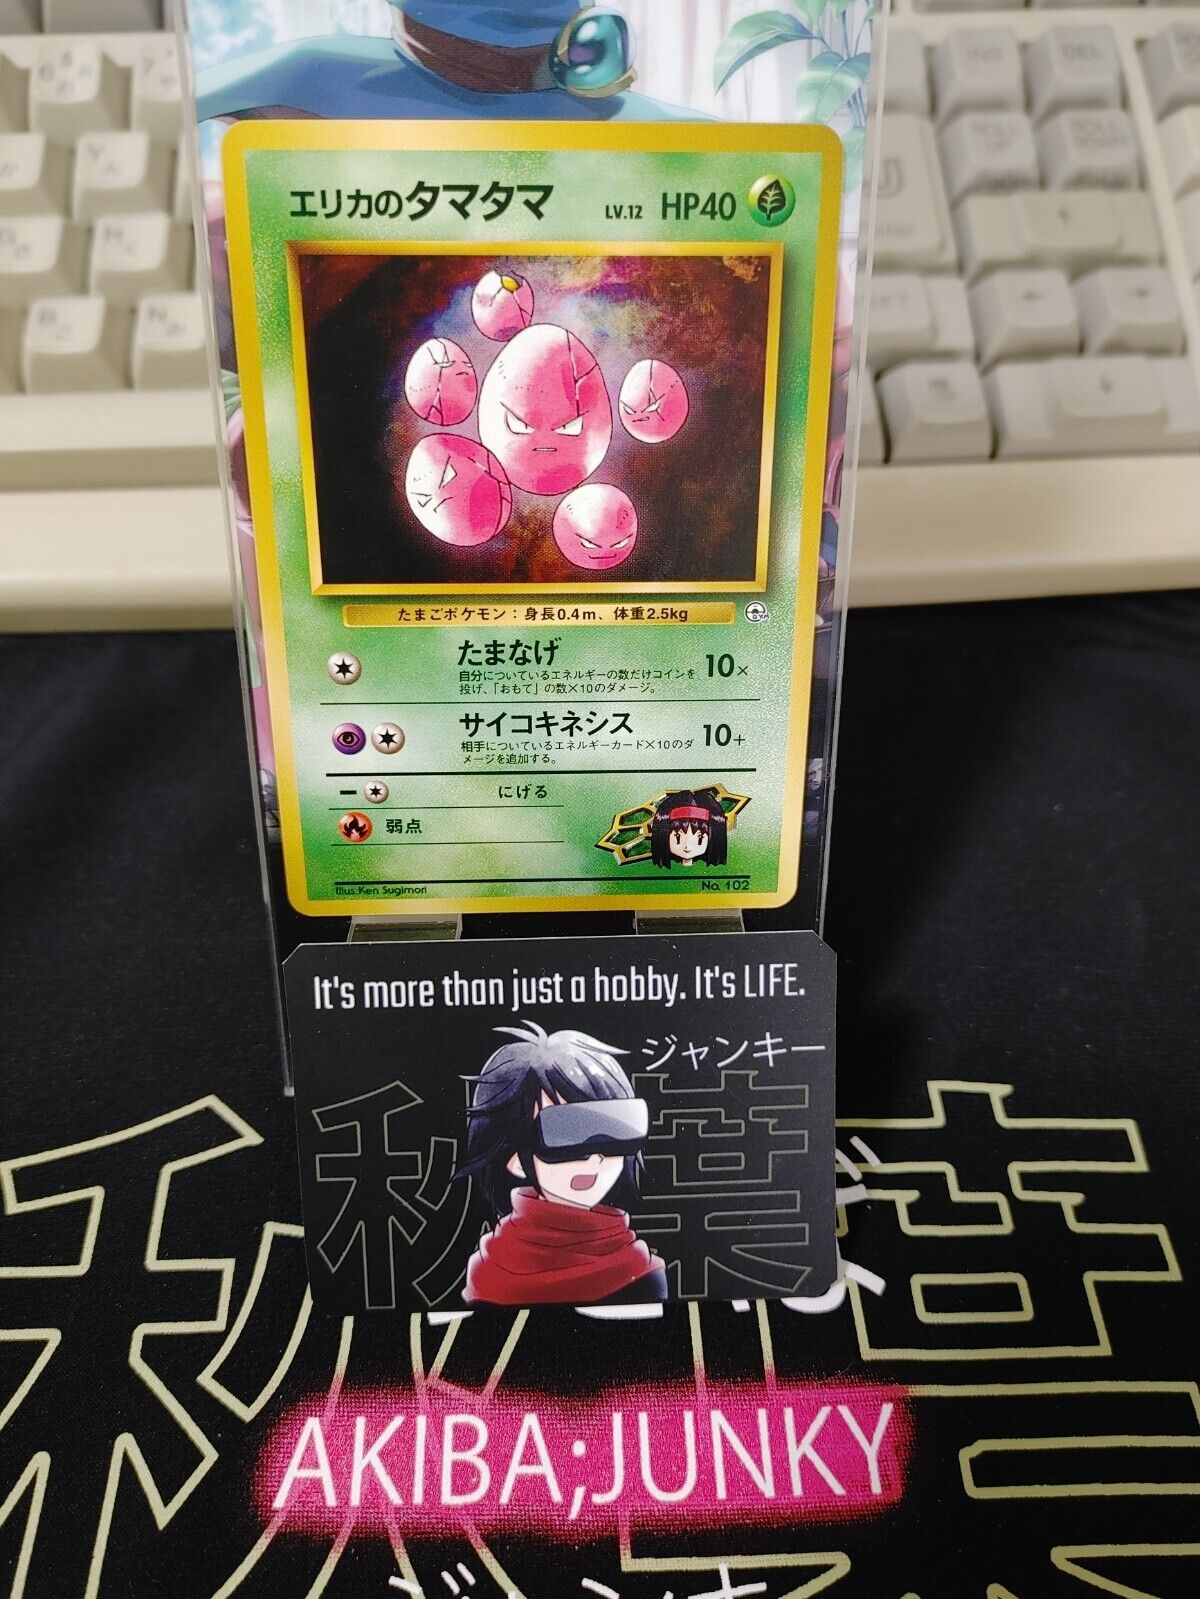 Erika's Exeggcute Pokemon 102 Japanese Vintage TCG Card Japan Original Release